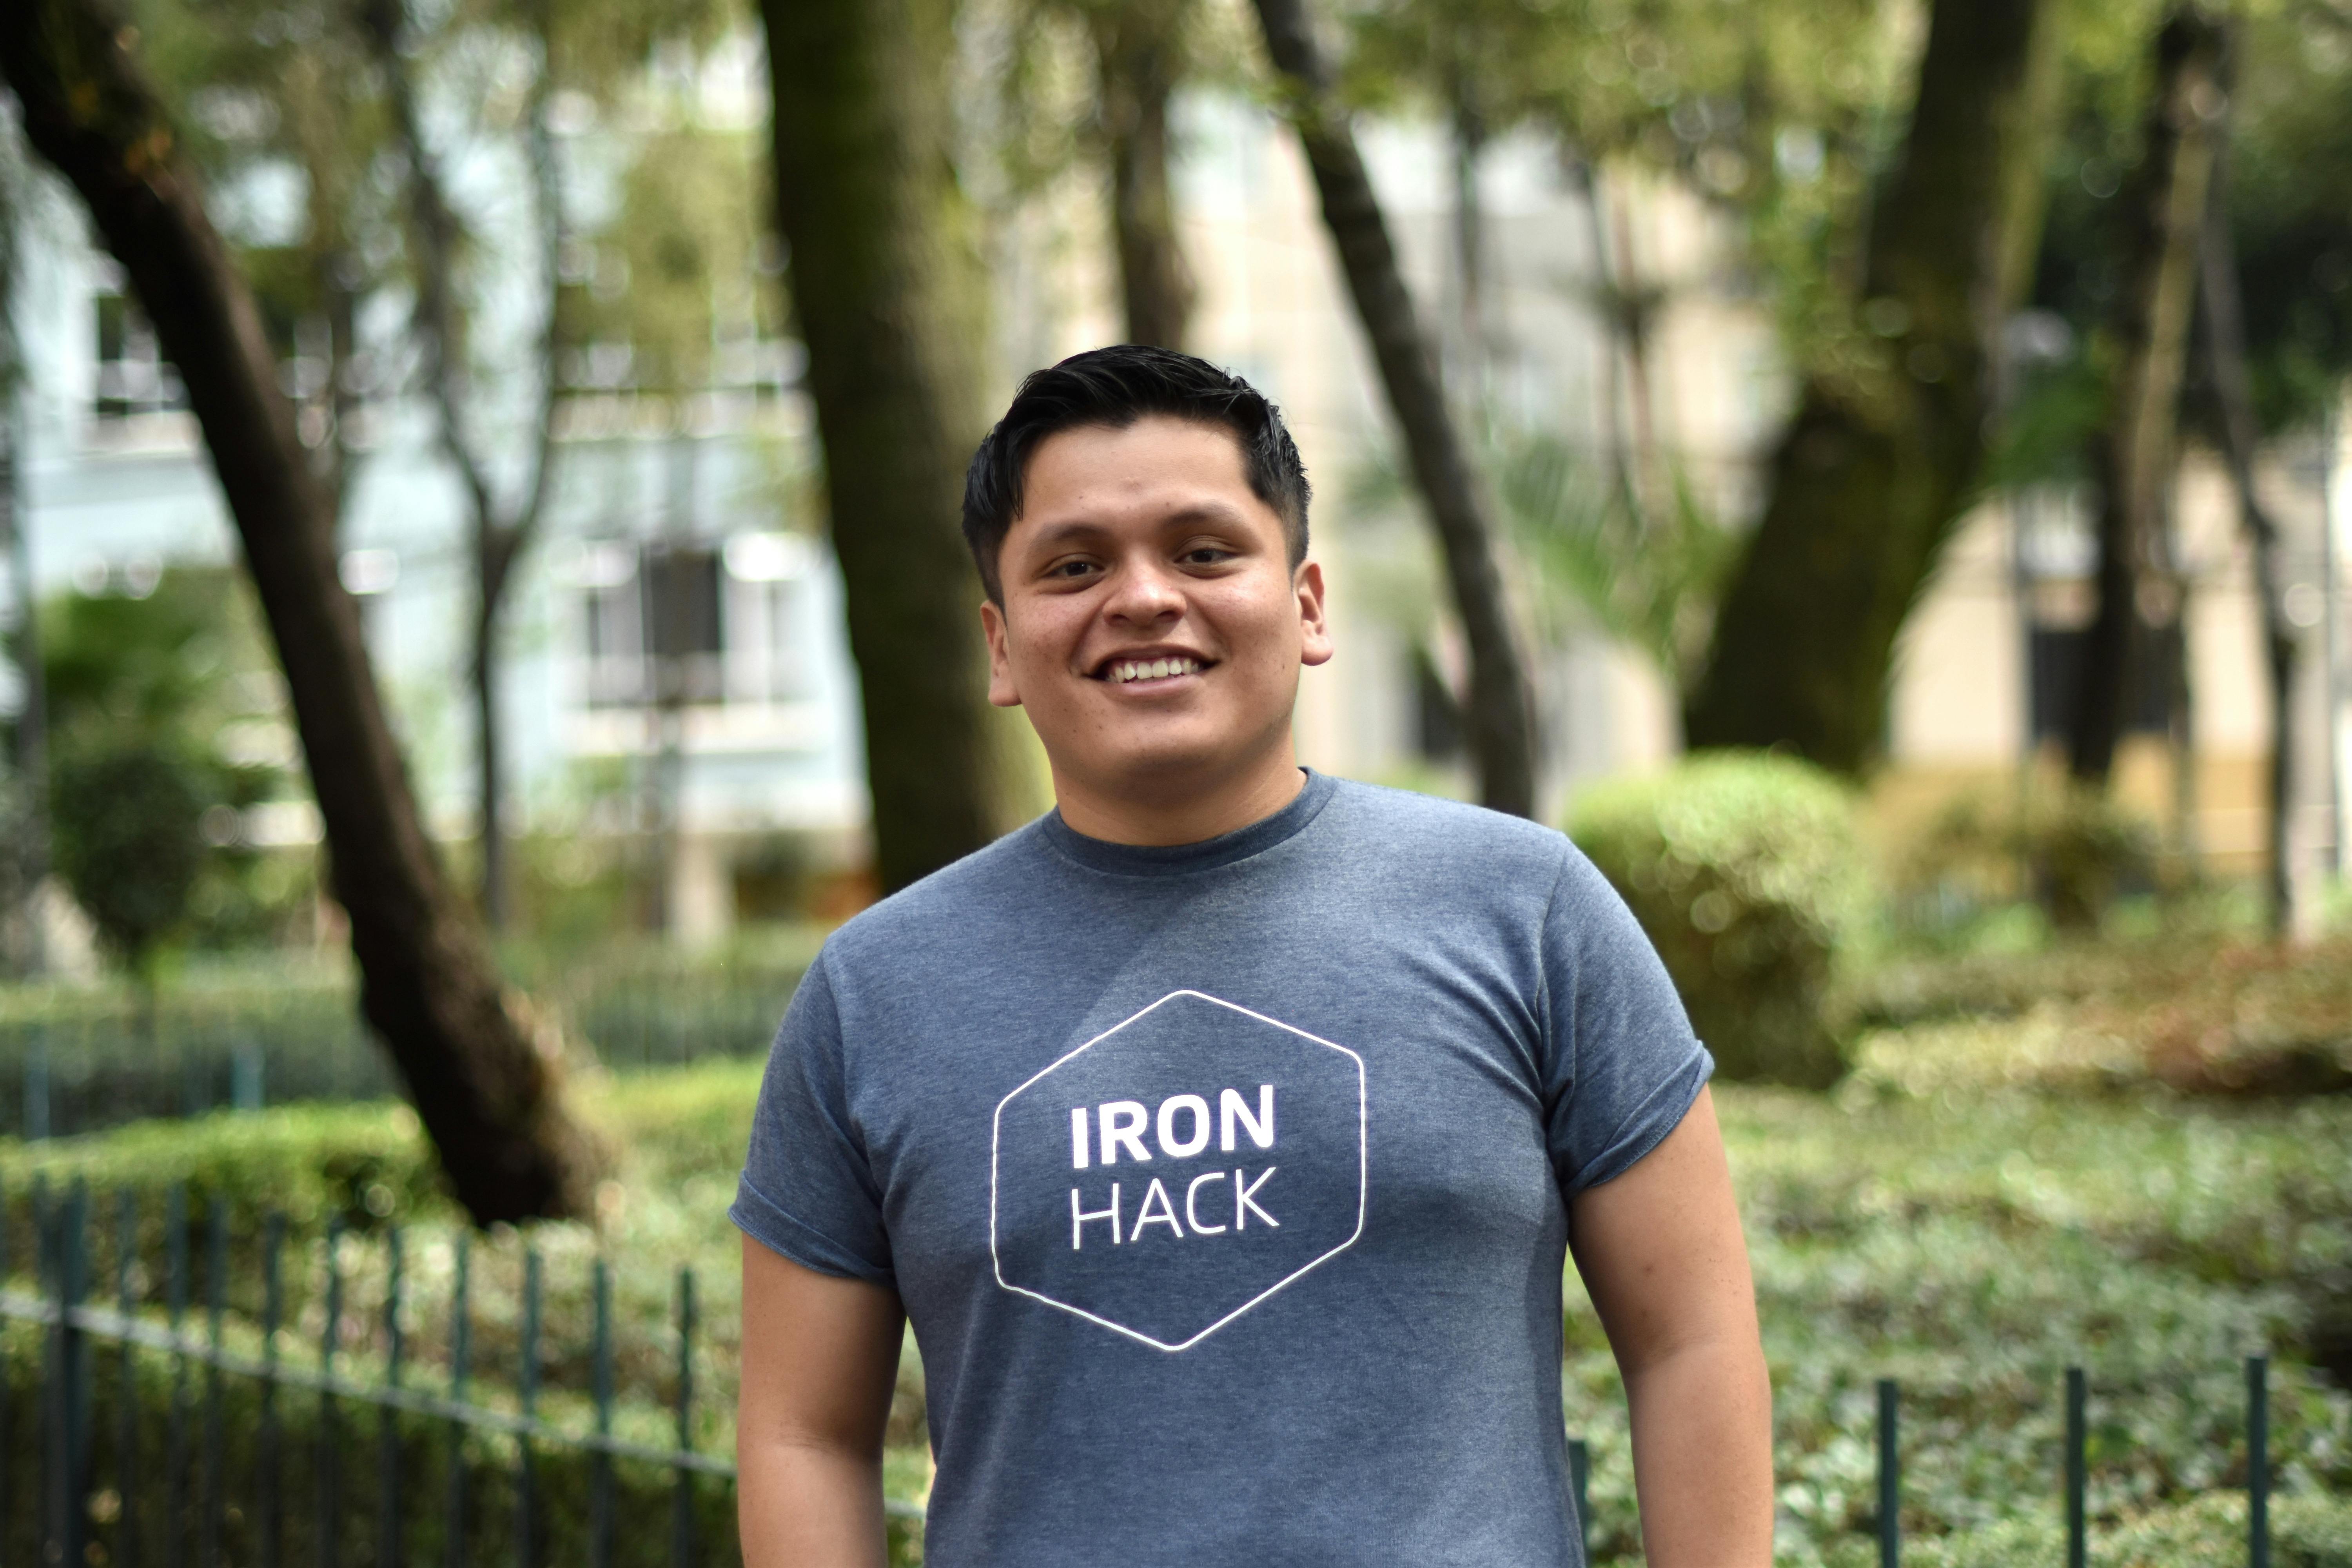 Ironhack UX/UI design instructor Emmanuel Aceves